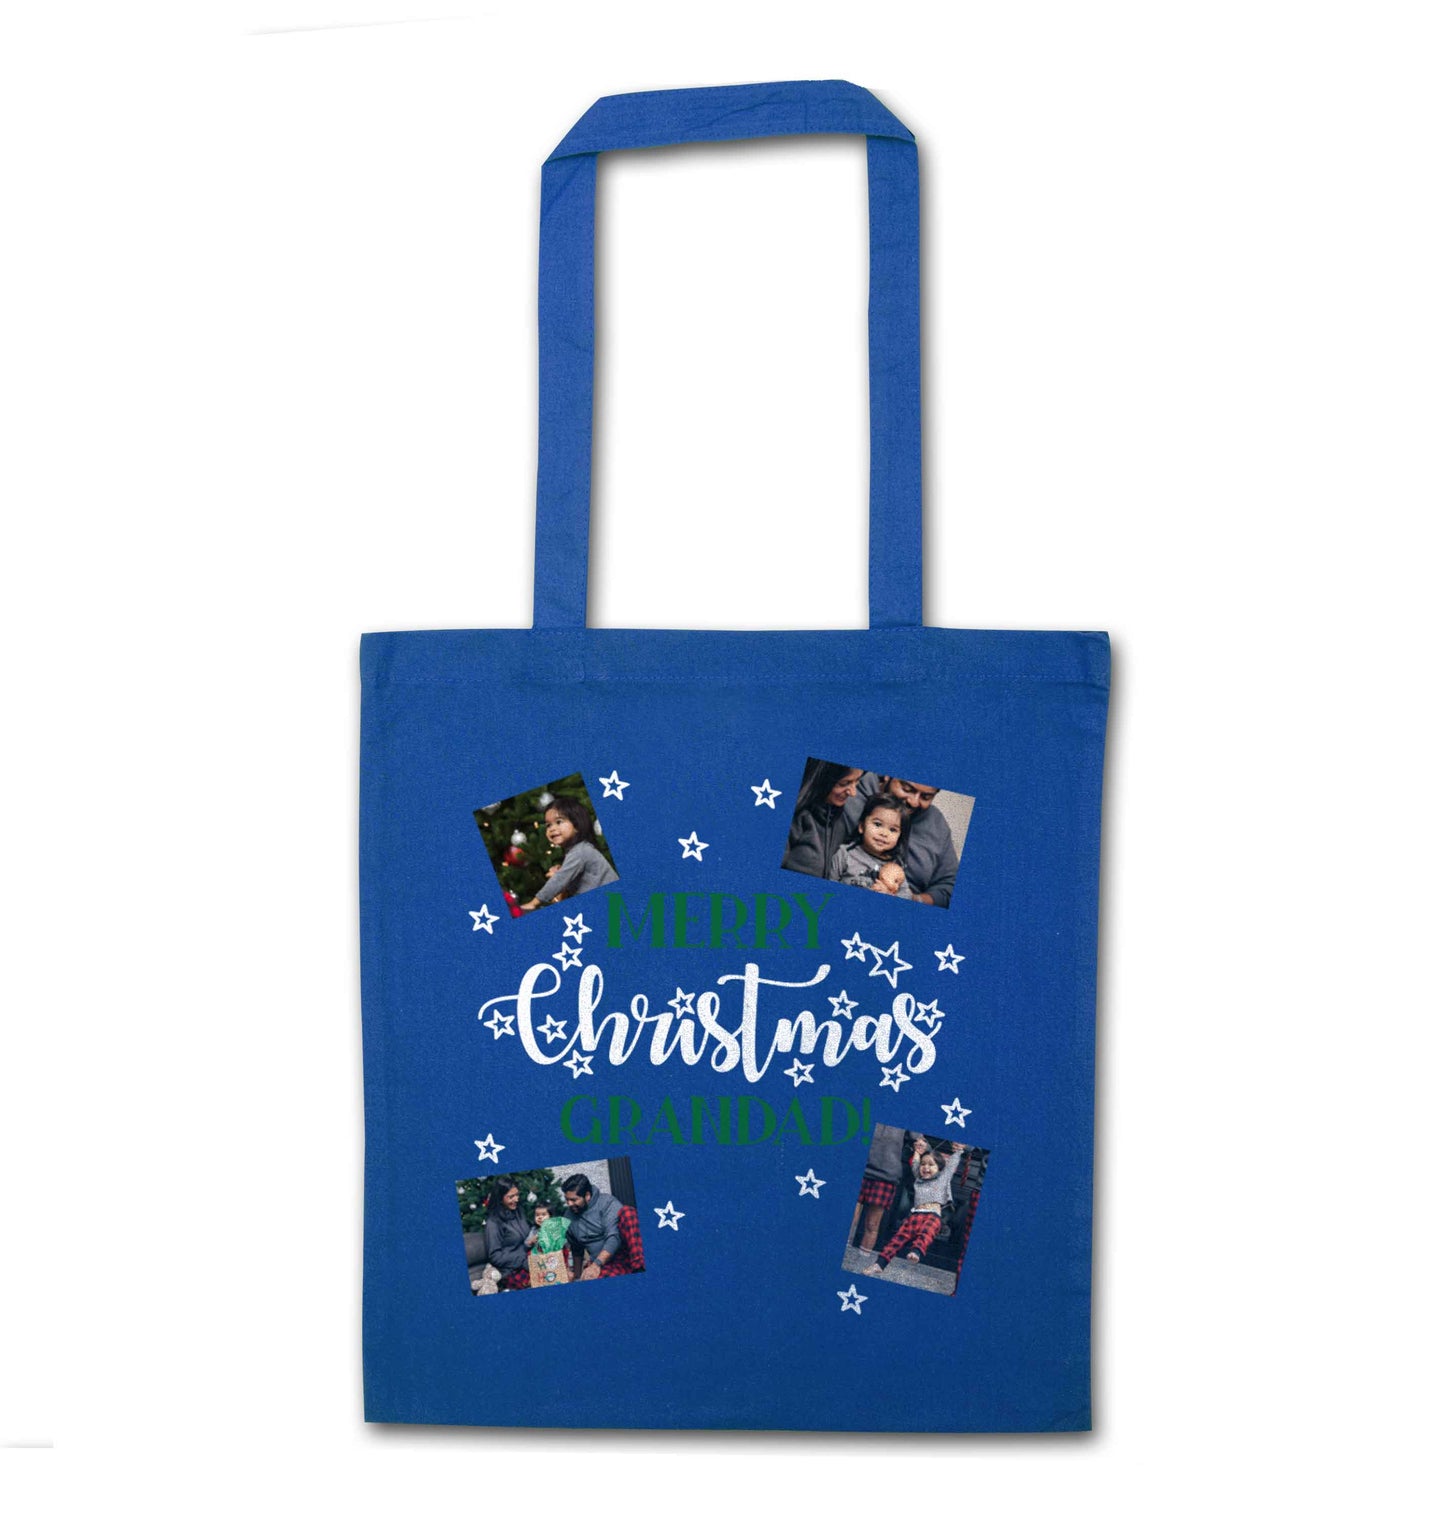 Merry Christmas grandad blue tote bag